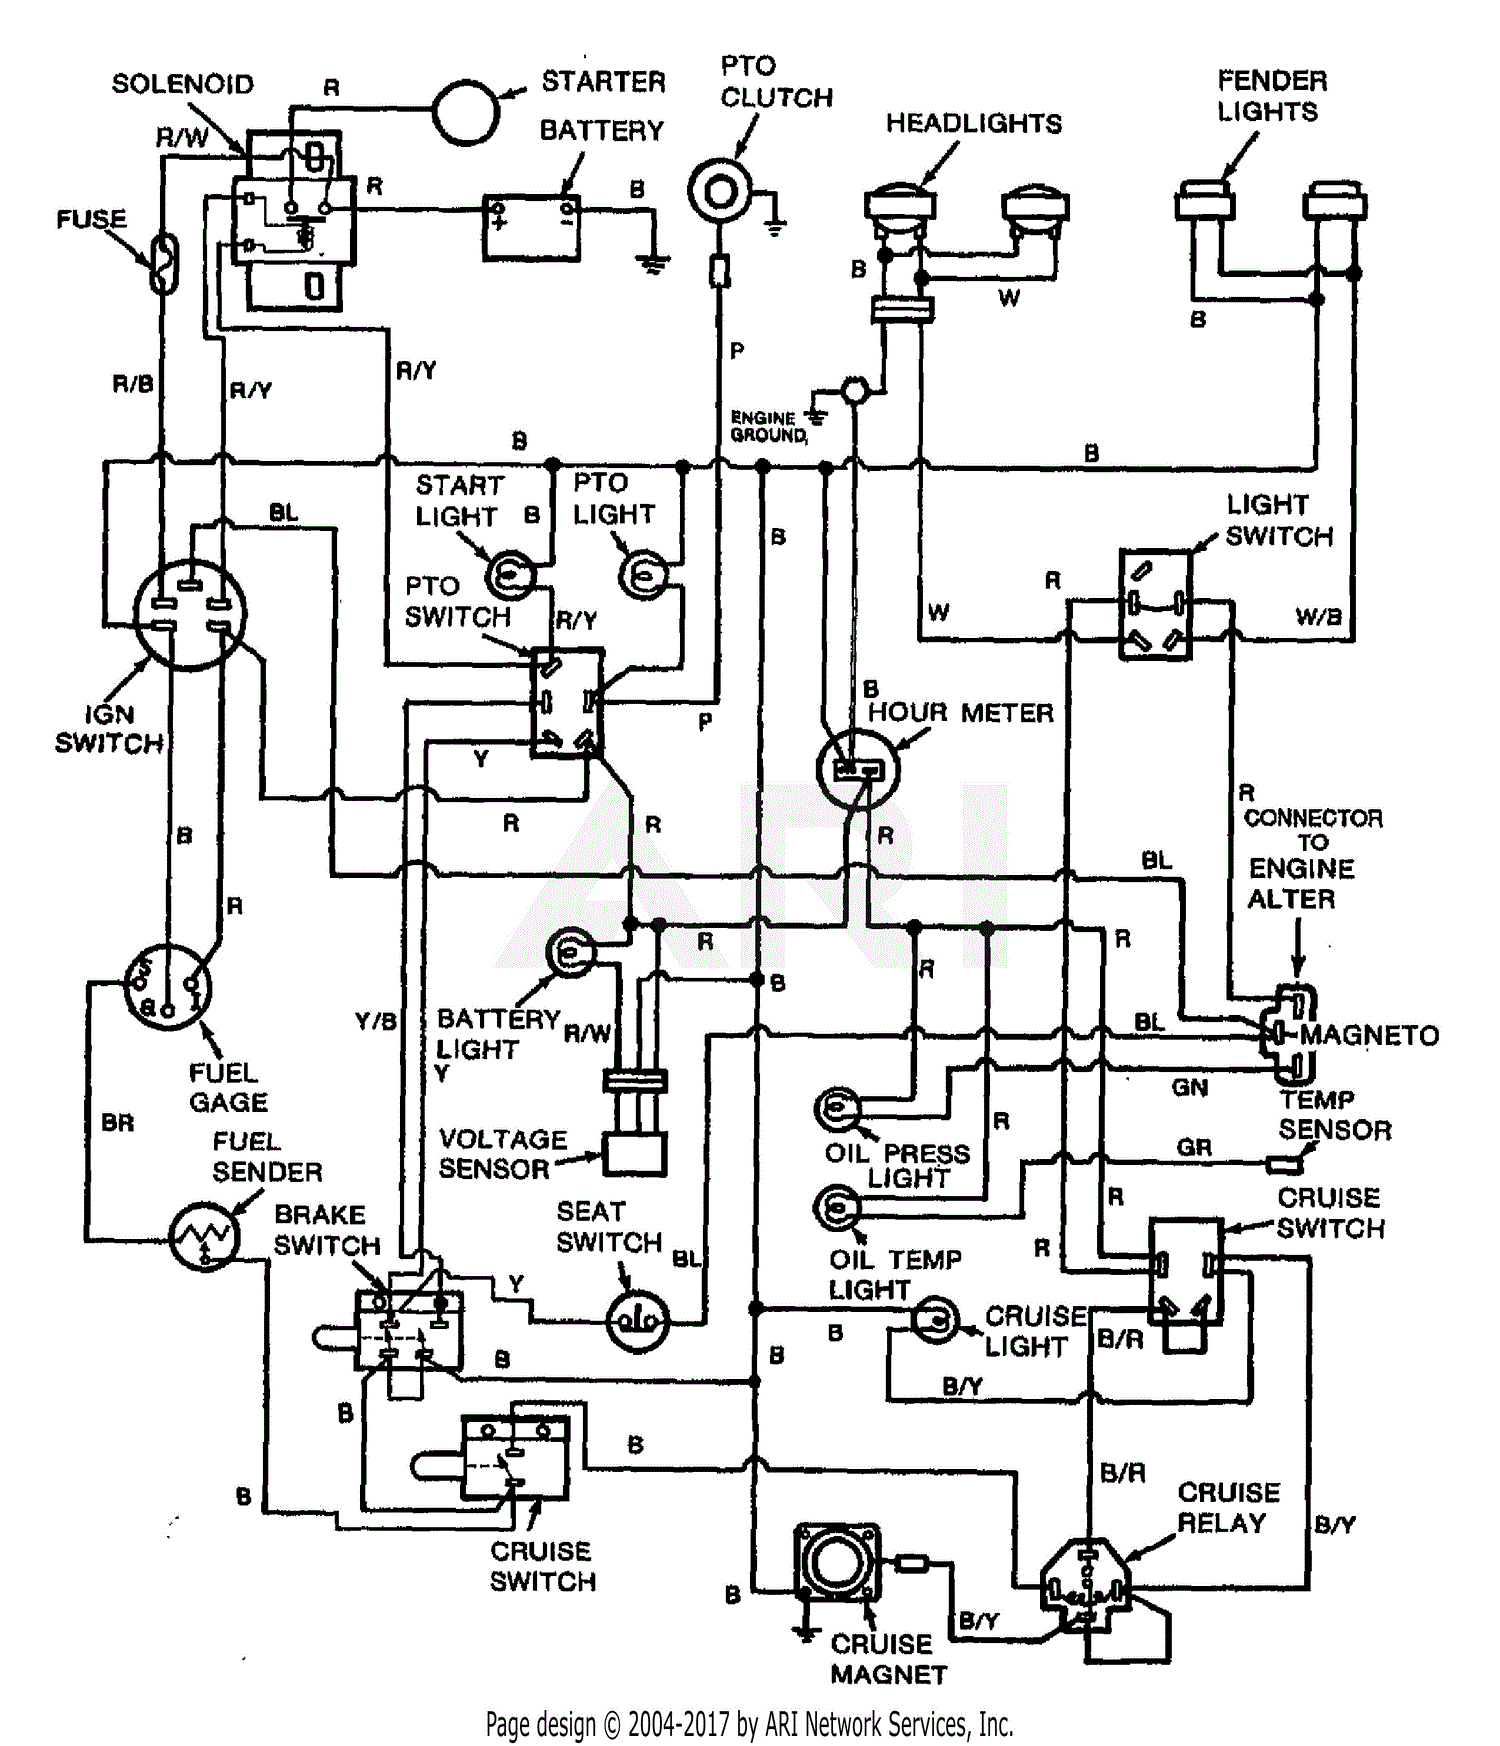 Diagram Mtd Garden Tractor Wiring Diagram Full Version Hd Quality Wiring Diagram Eightdiagram E Conquete Fr